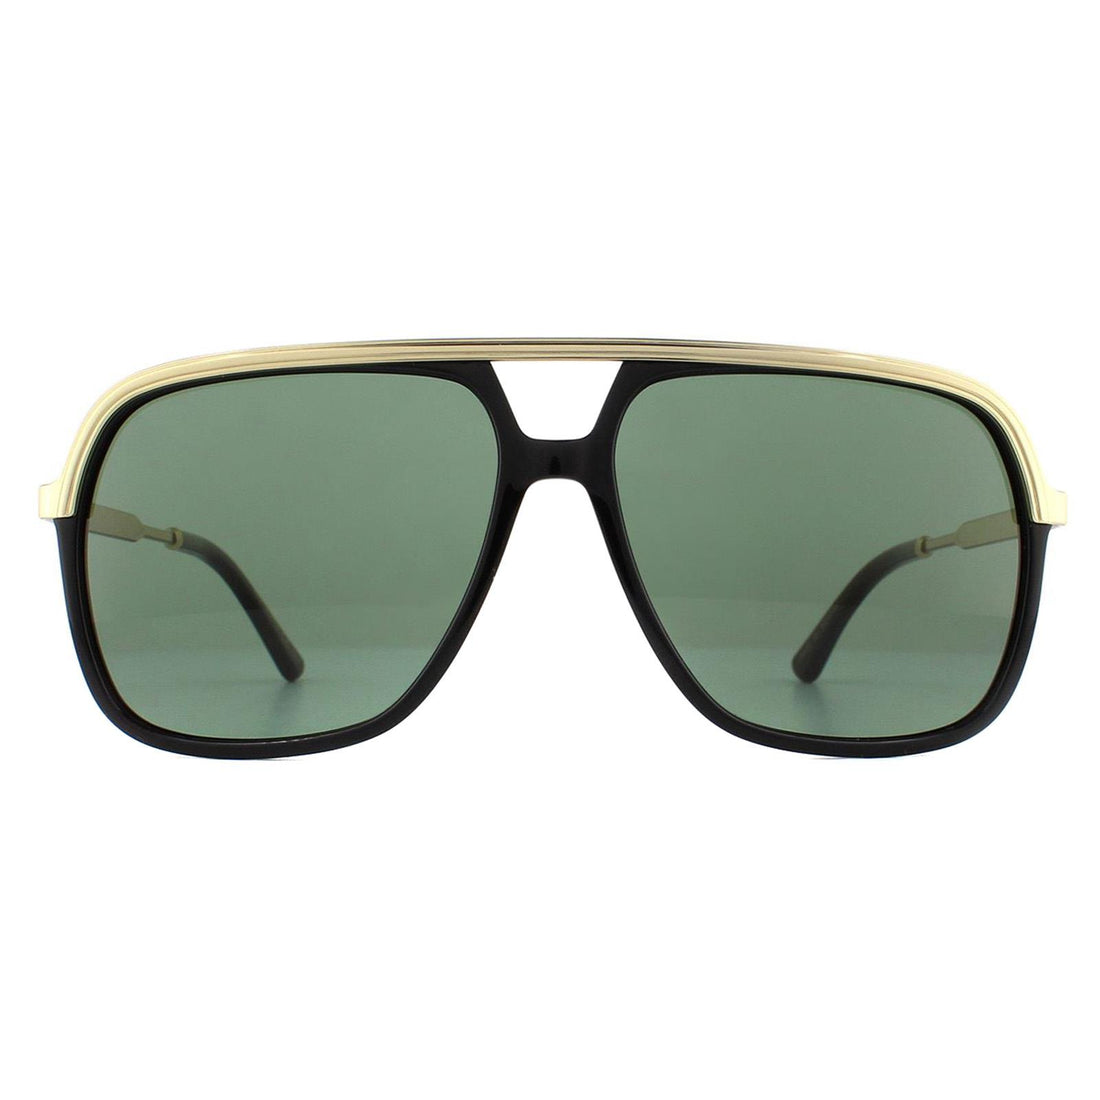 Gucci GG0200S Sunglasses Black and Gold / Green